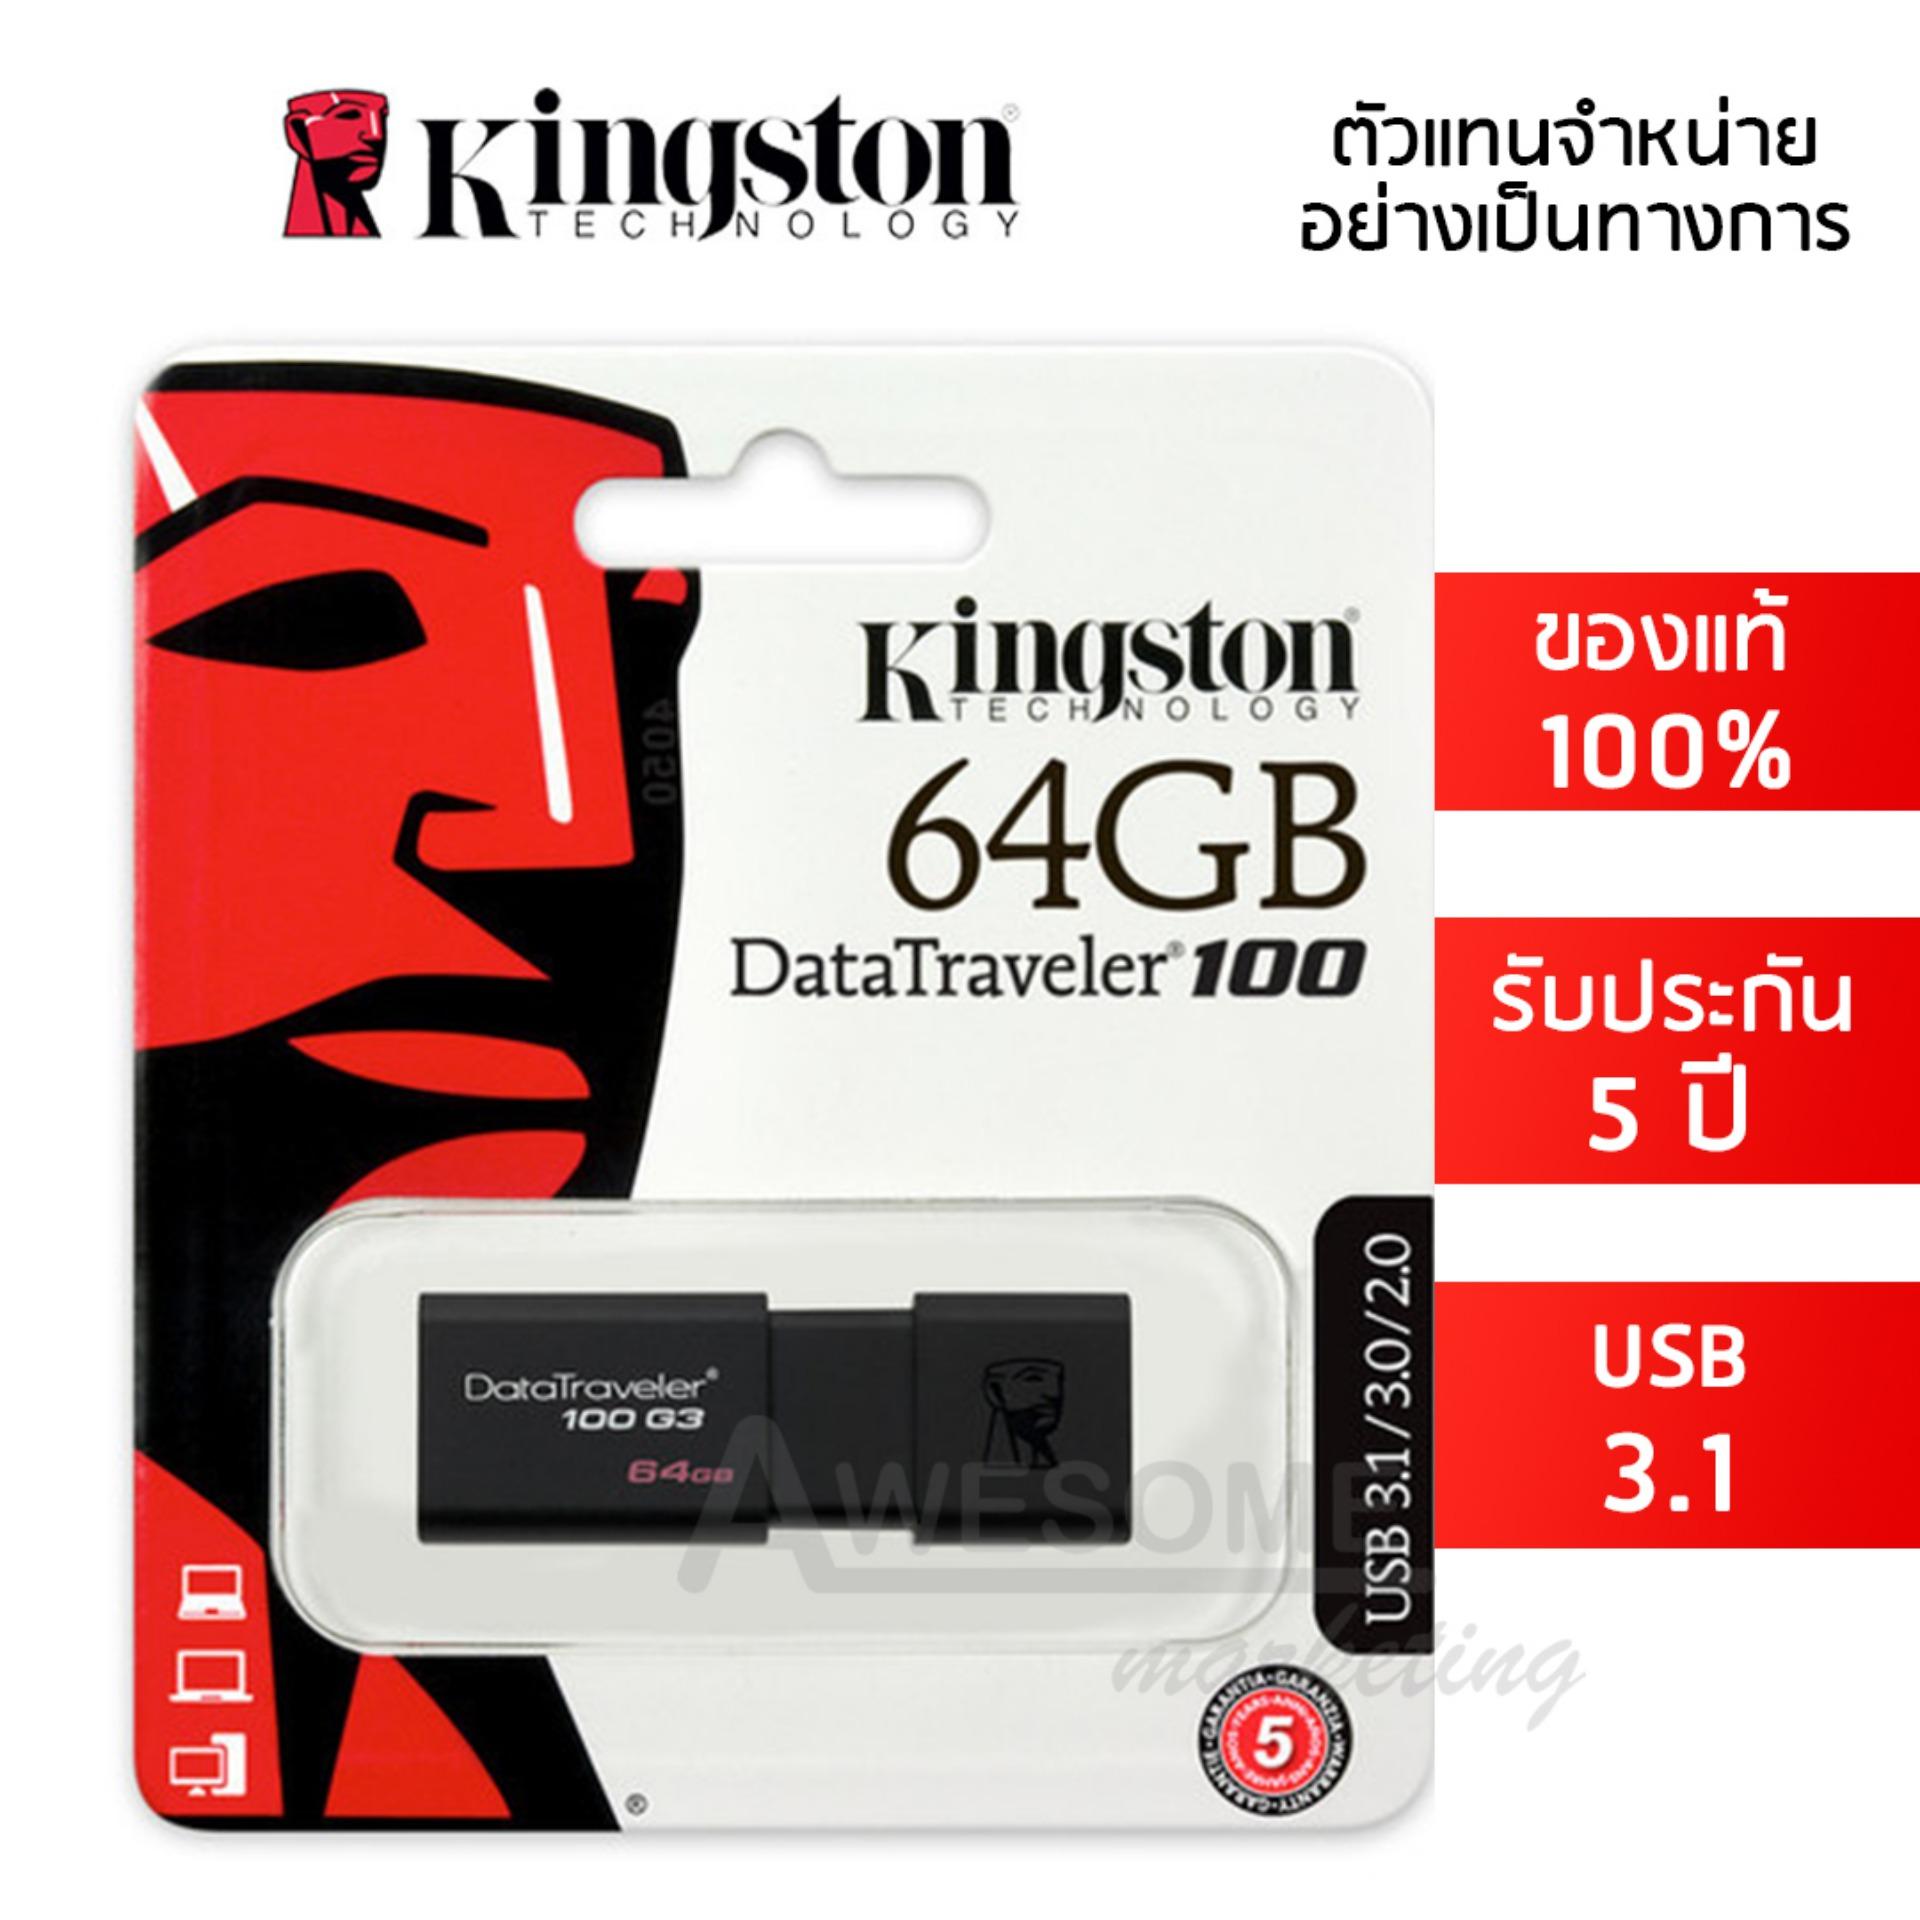 Kingston 64GB DataTraveler 100G3 Flash Drive USB 3.1 ความเร็วสูงสุด 100 MB/s